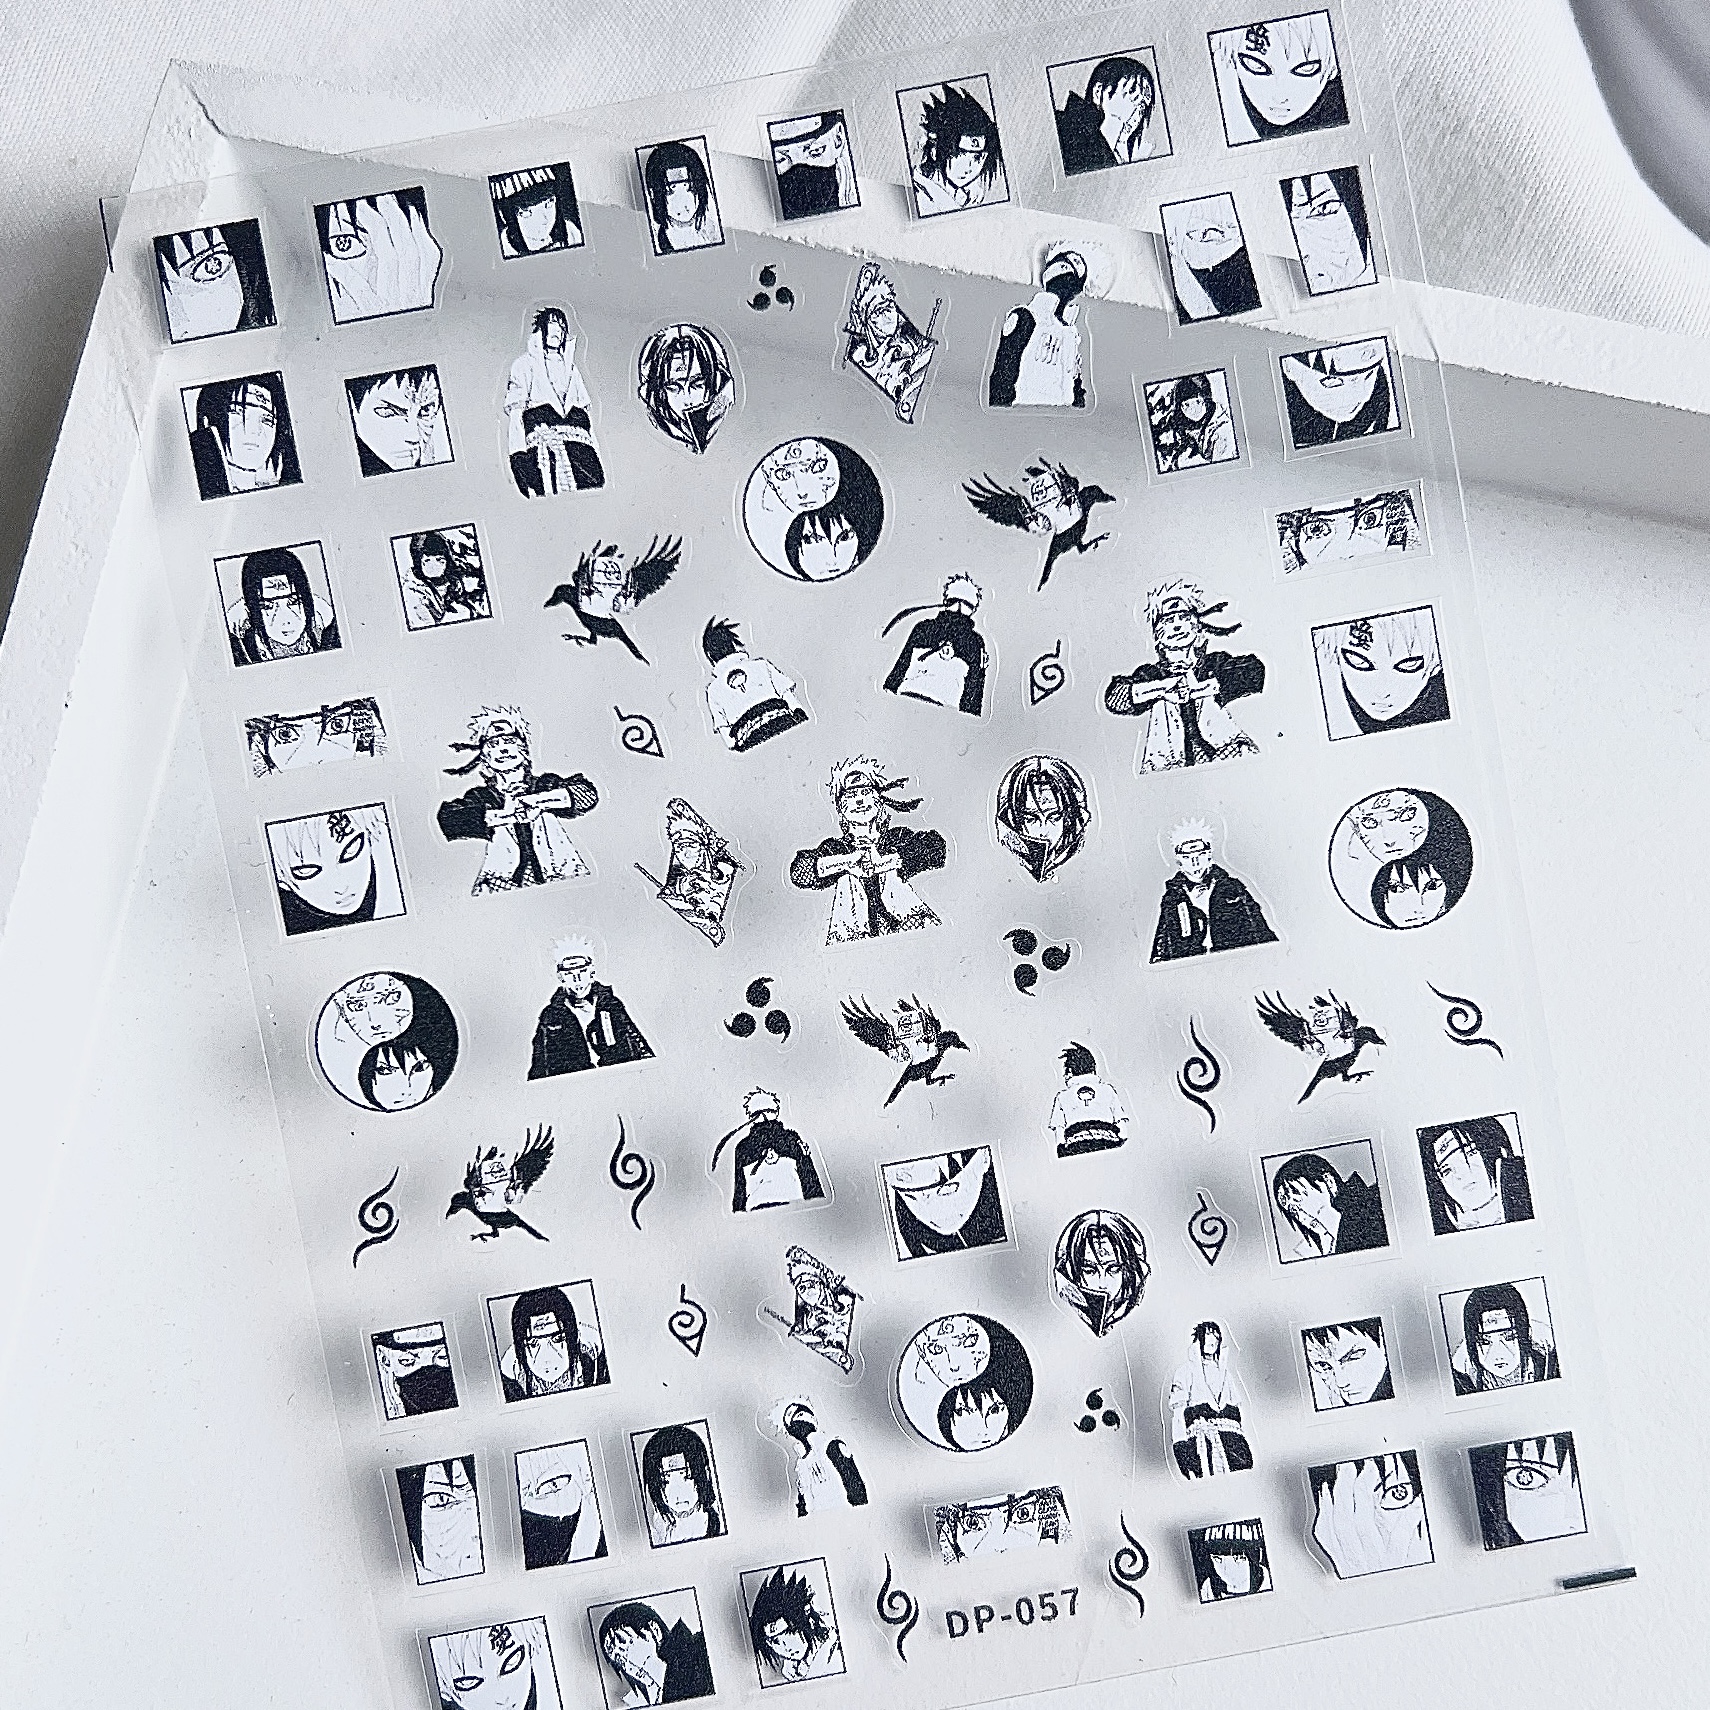 Chanel Nail Stickers Set（6 Sheets)